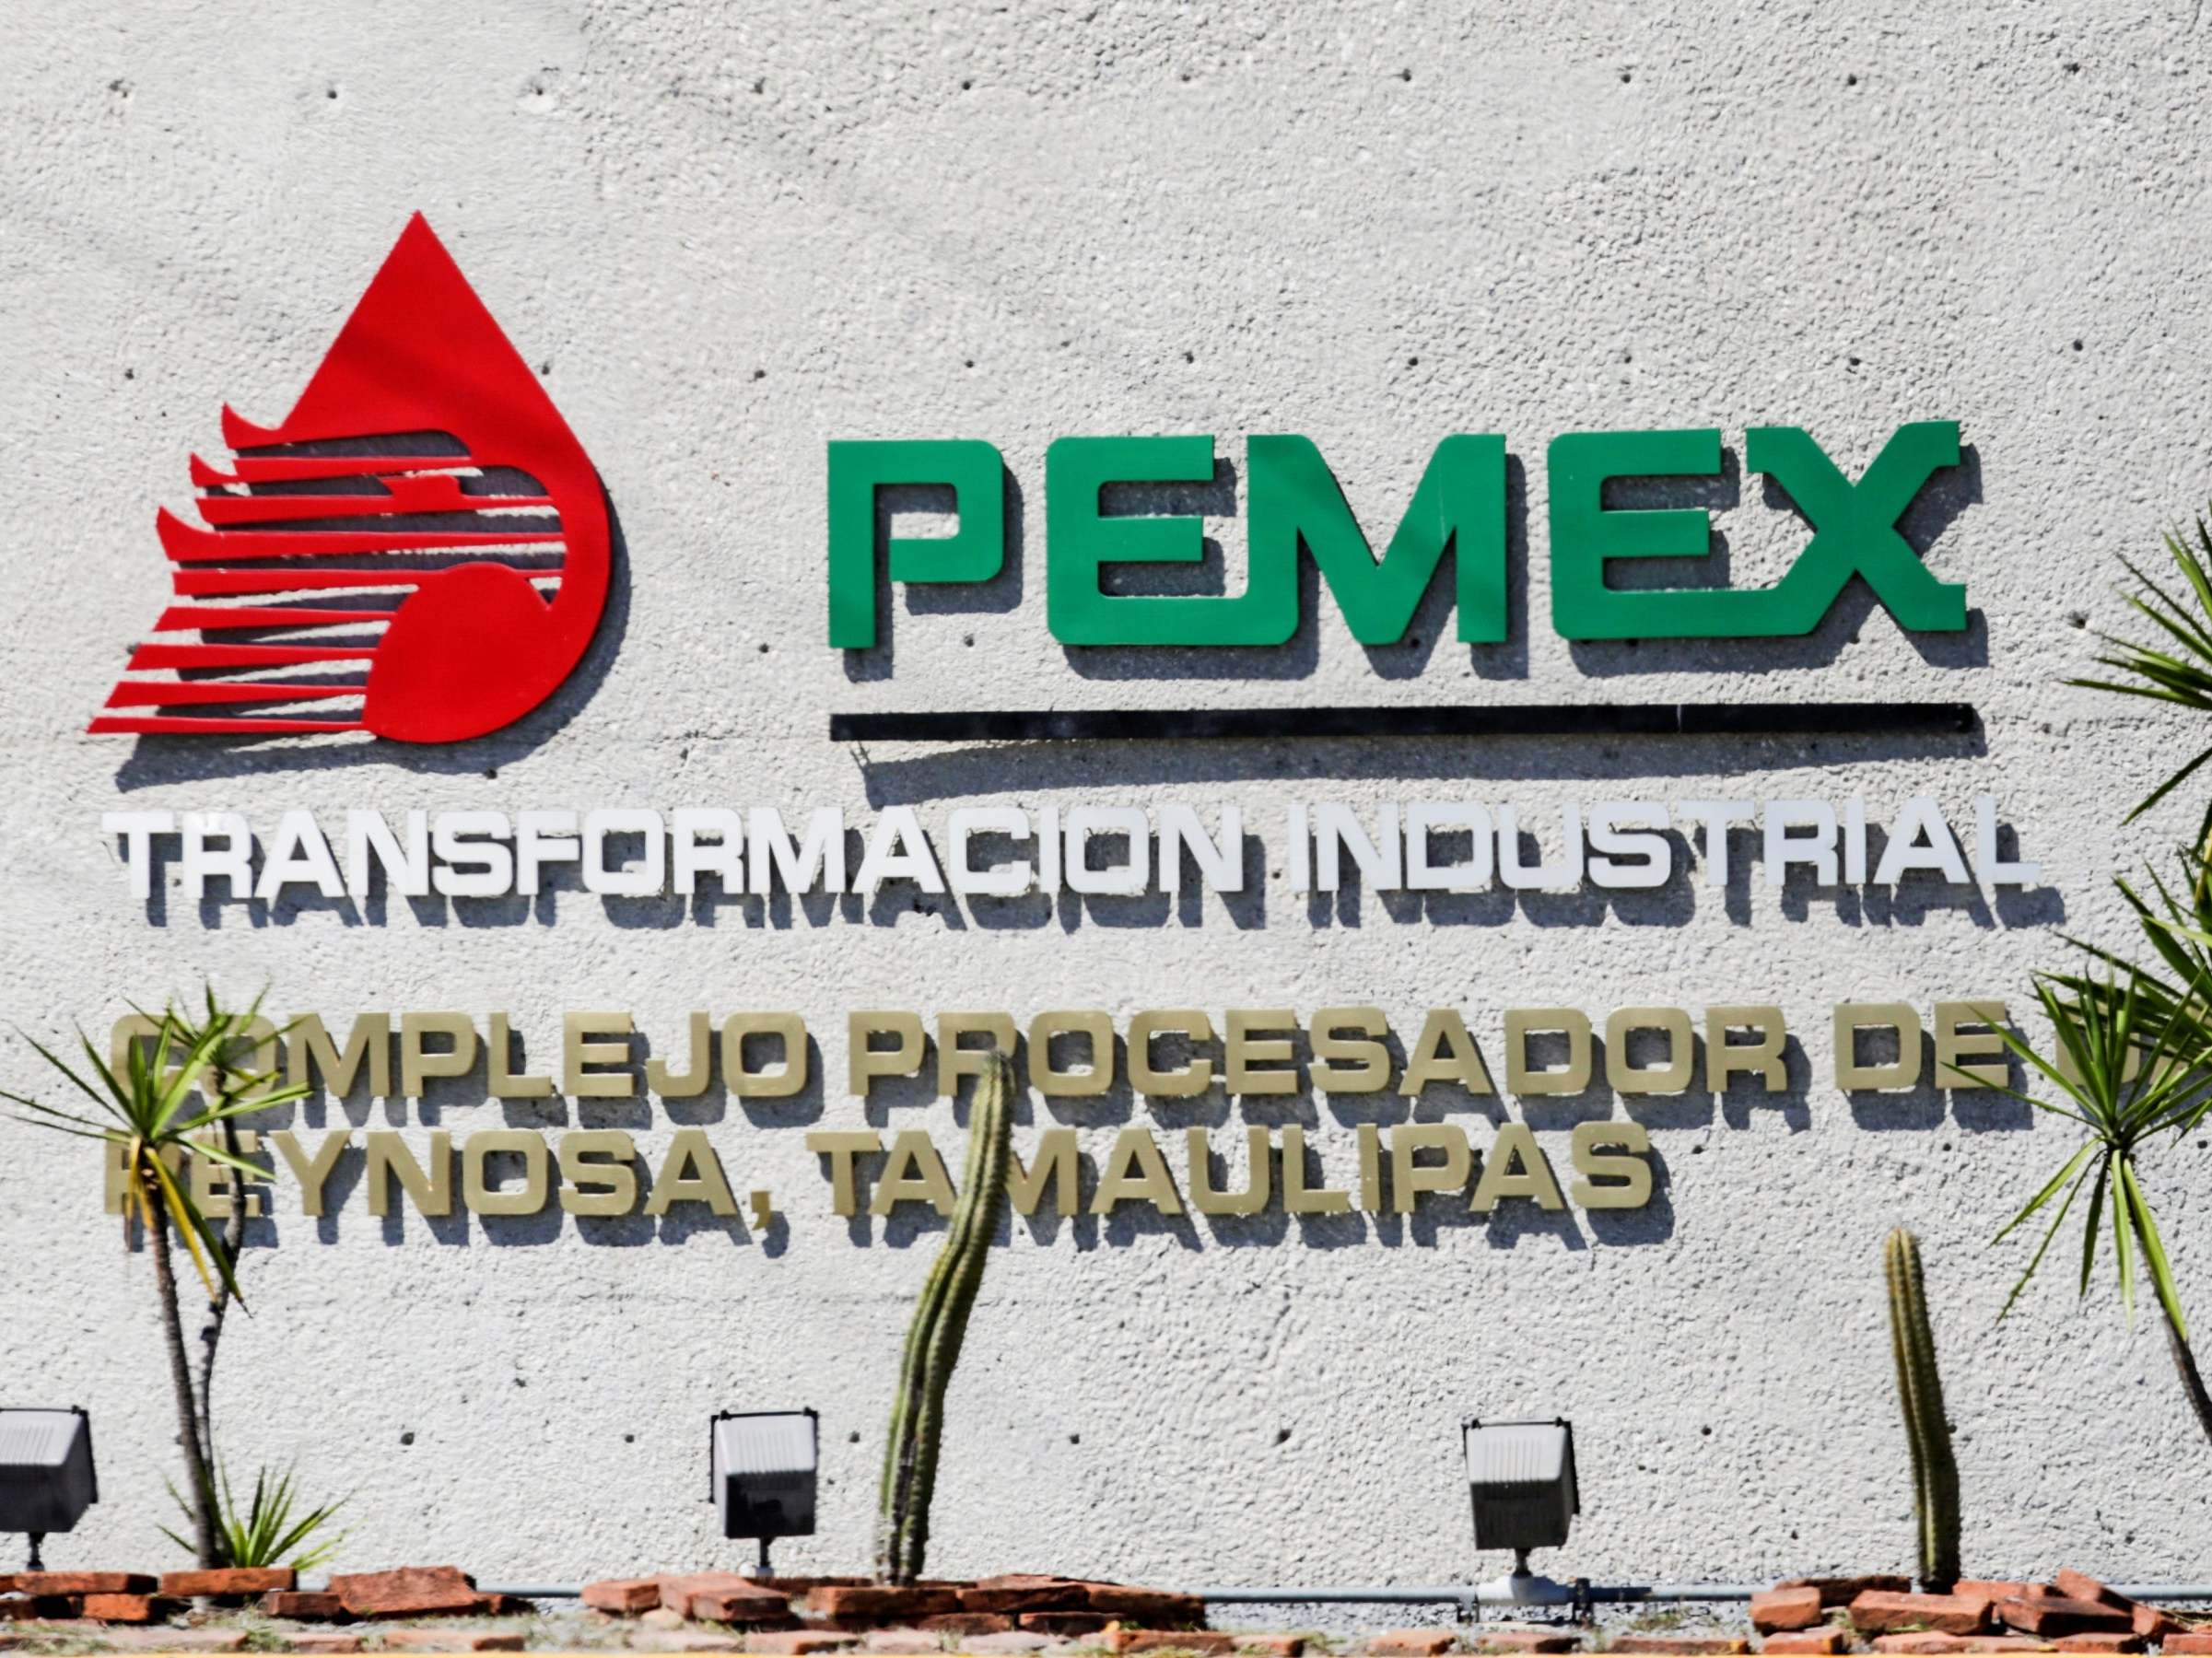 Oil company Pemex